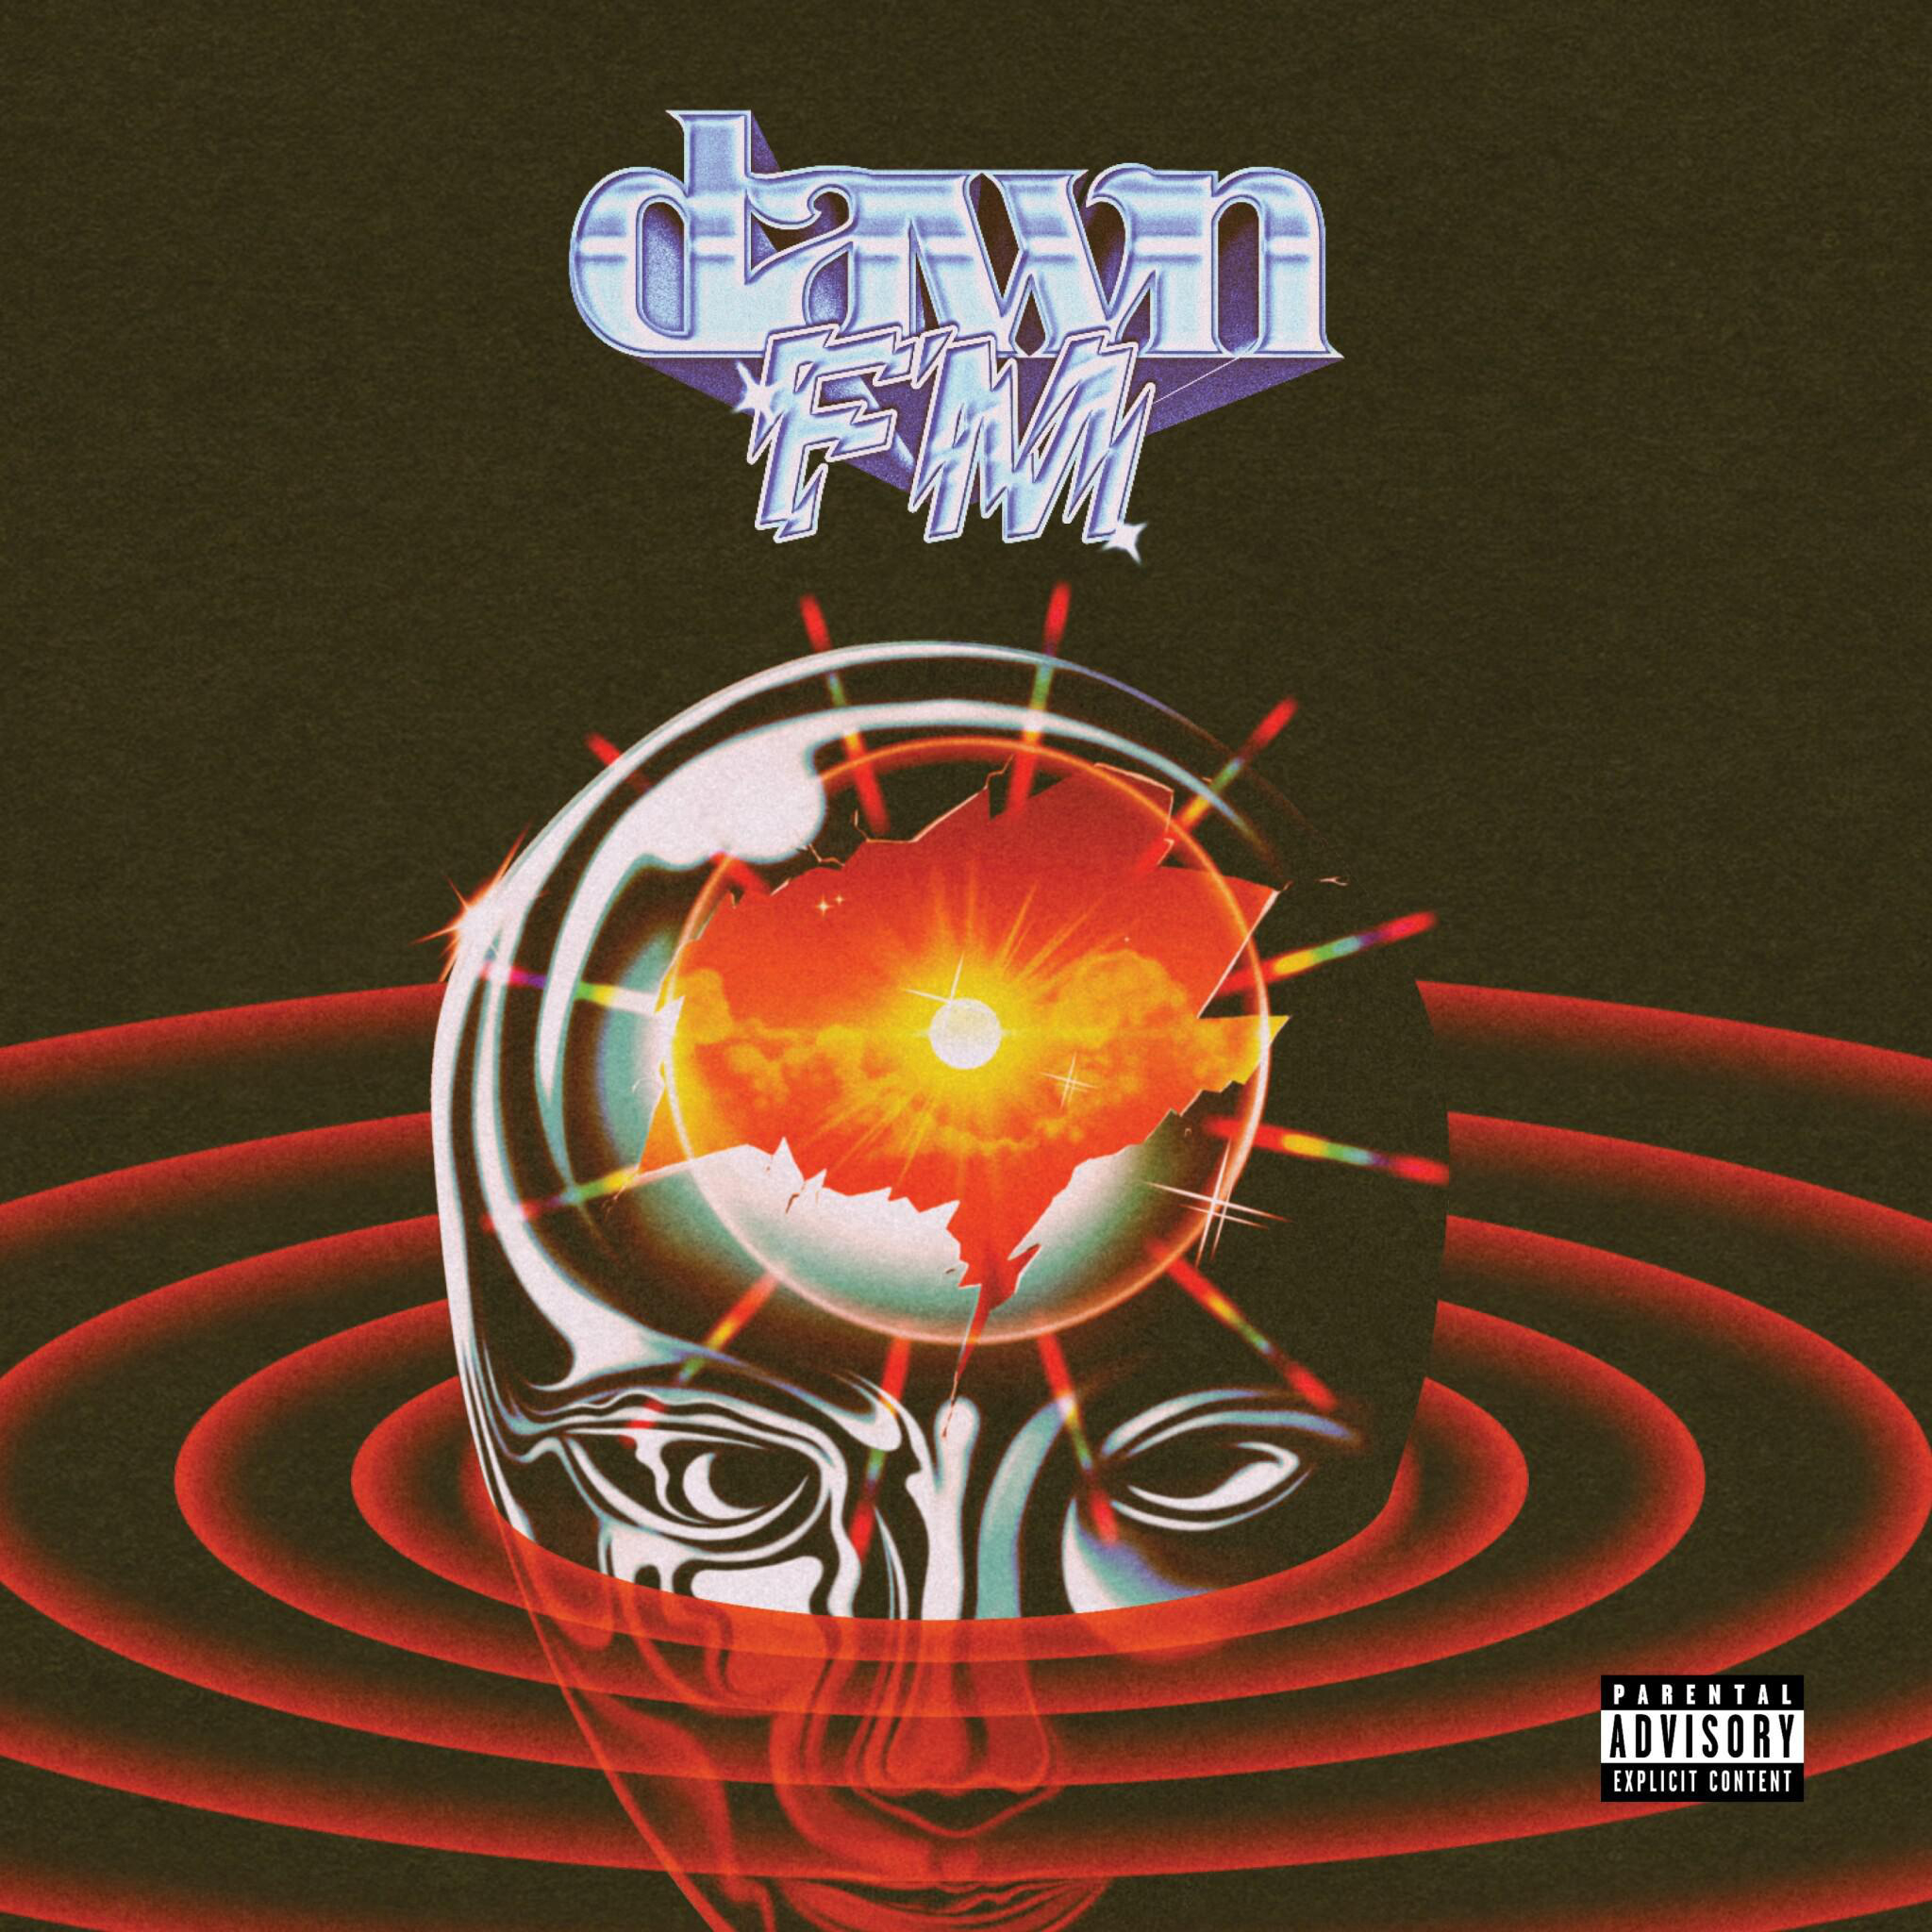 The Weeknd - Dawn FM - Cover) (CD) (Alternative